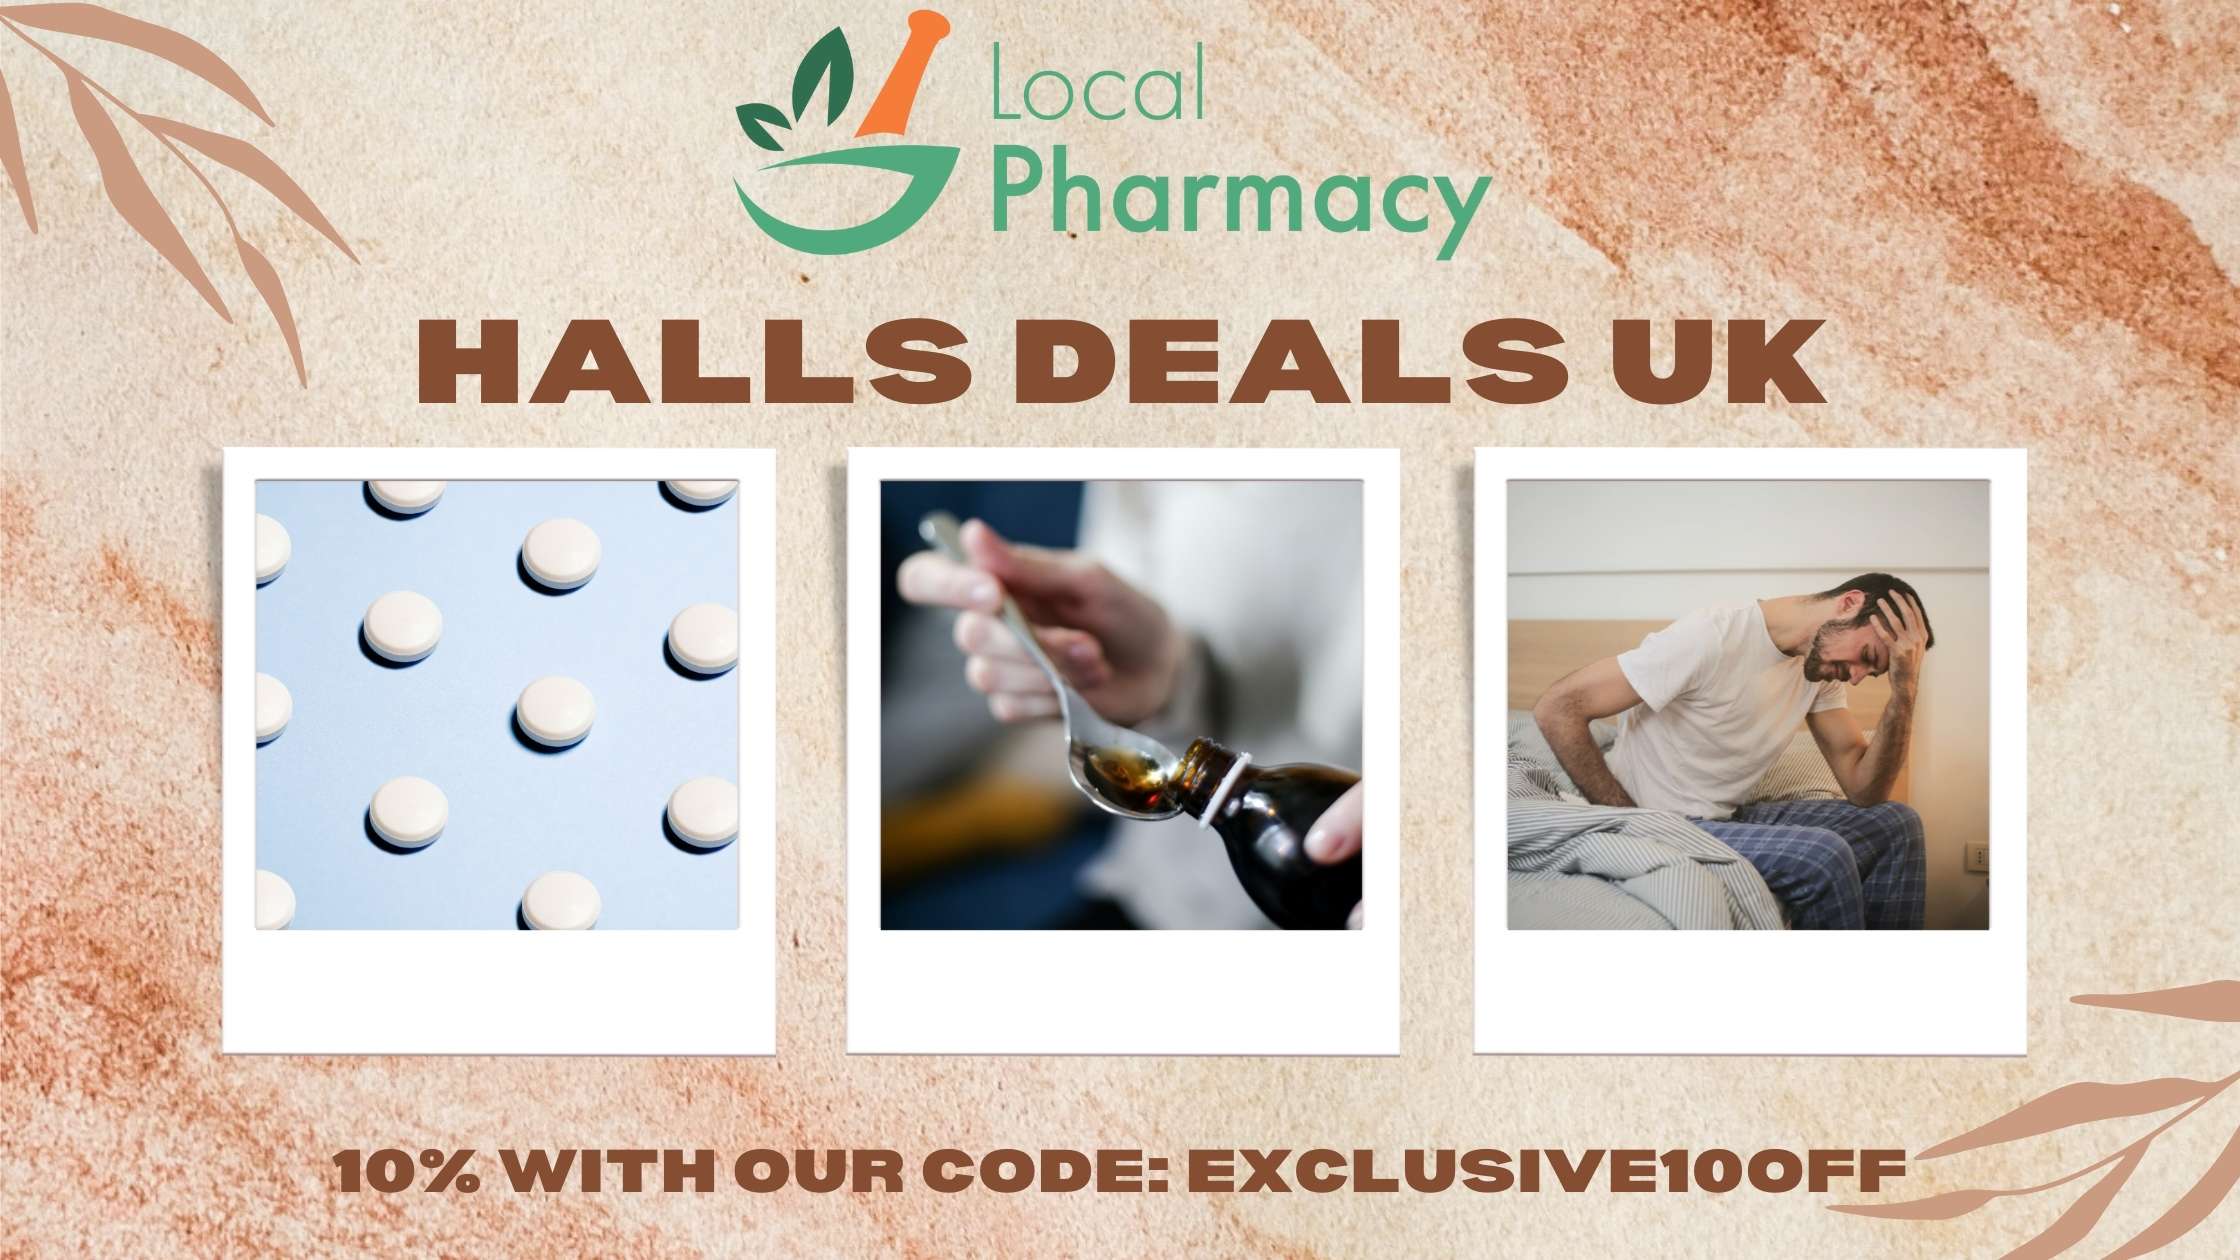 Halls coupon code and deals uk